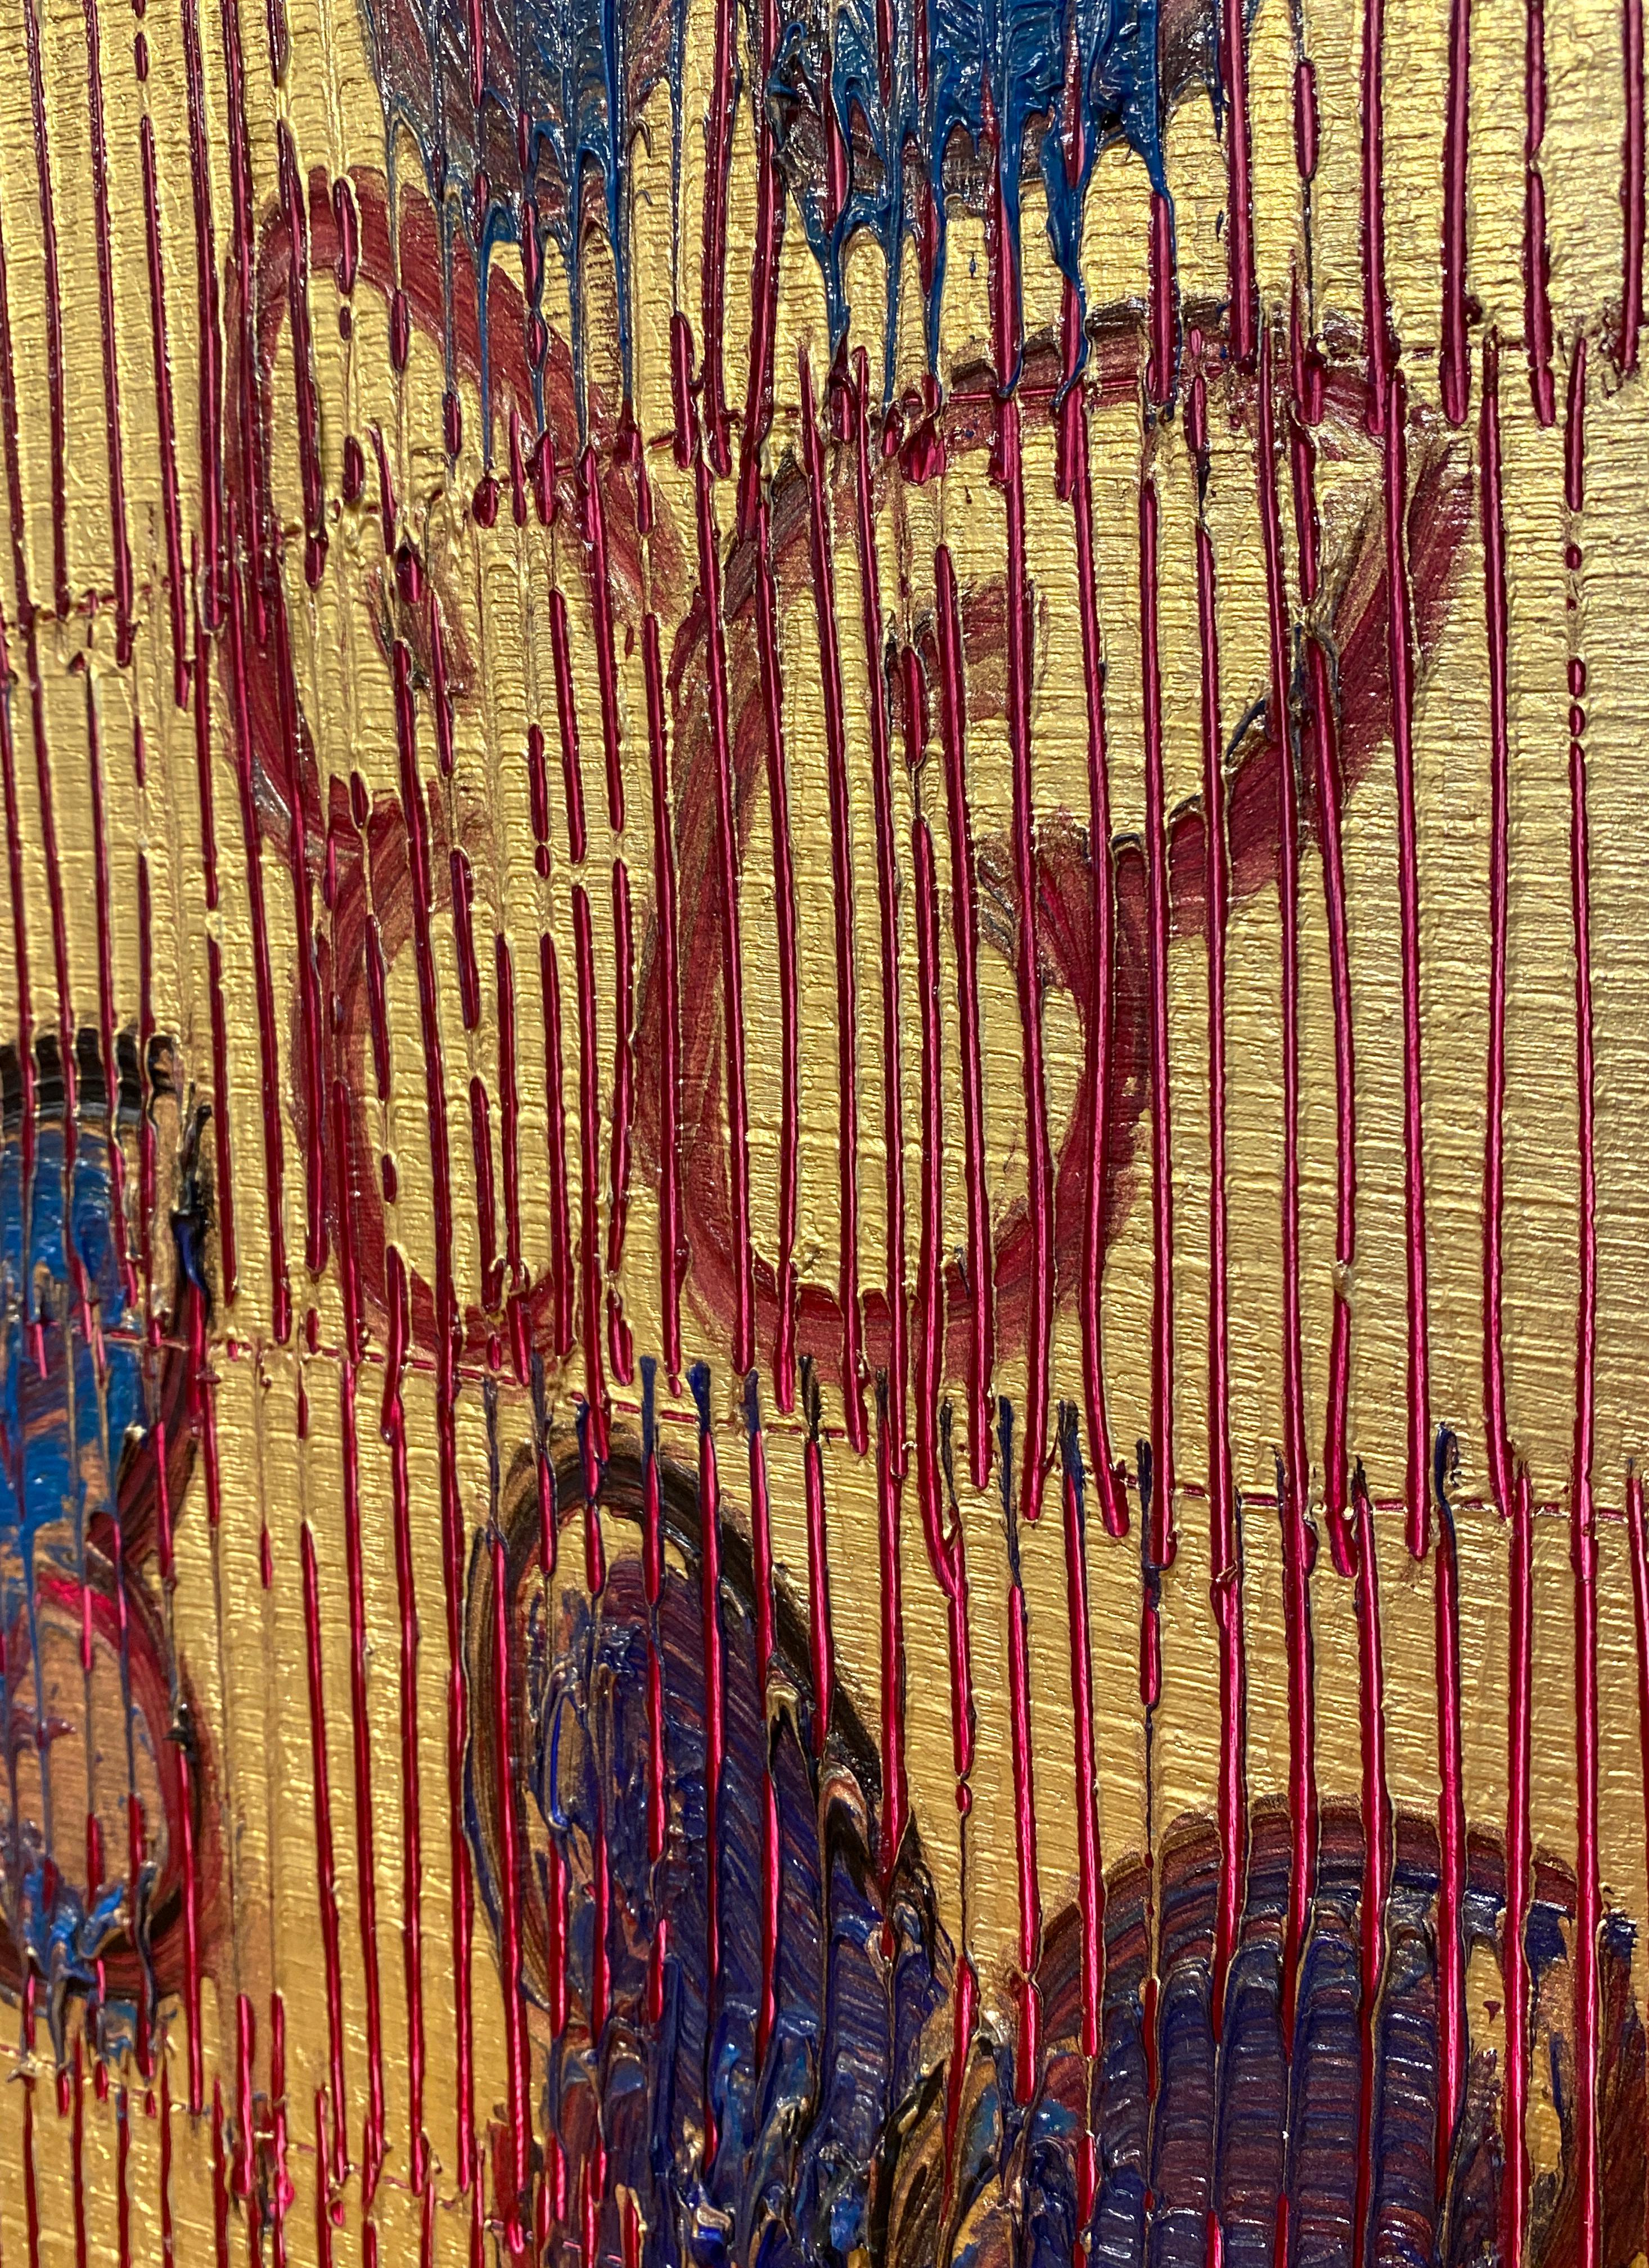 Artist:  Slonem, Hunt
Title:  Untitled (Red, Blue & Purple Butterflies)
Series:  Butterflies
Date:  2020
Medium:  Oil on wood
Unframed Dimensions:  24.5